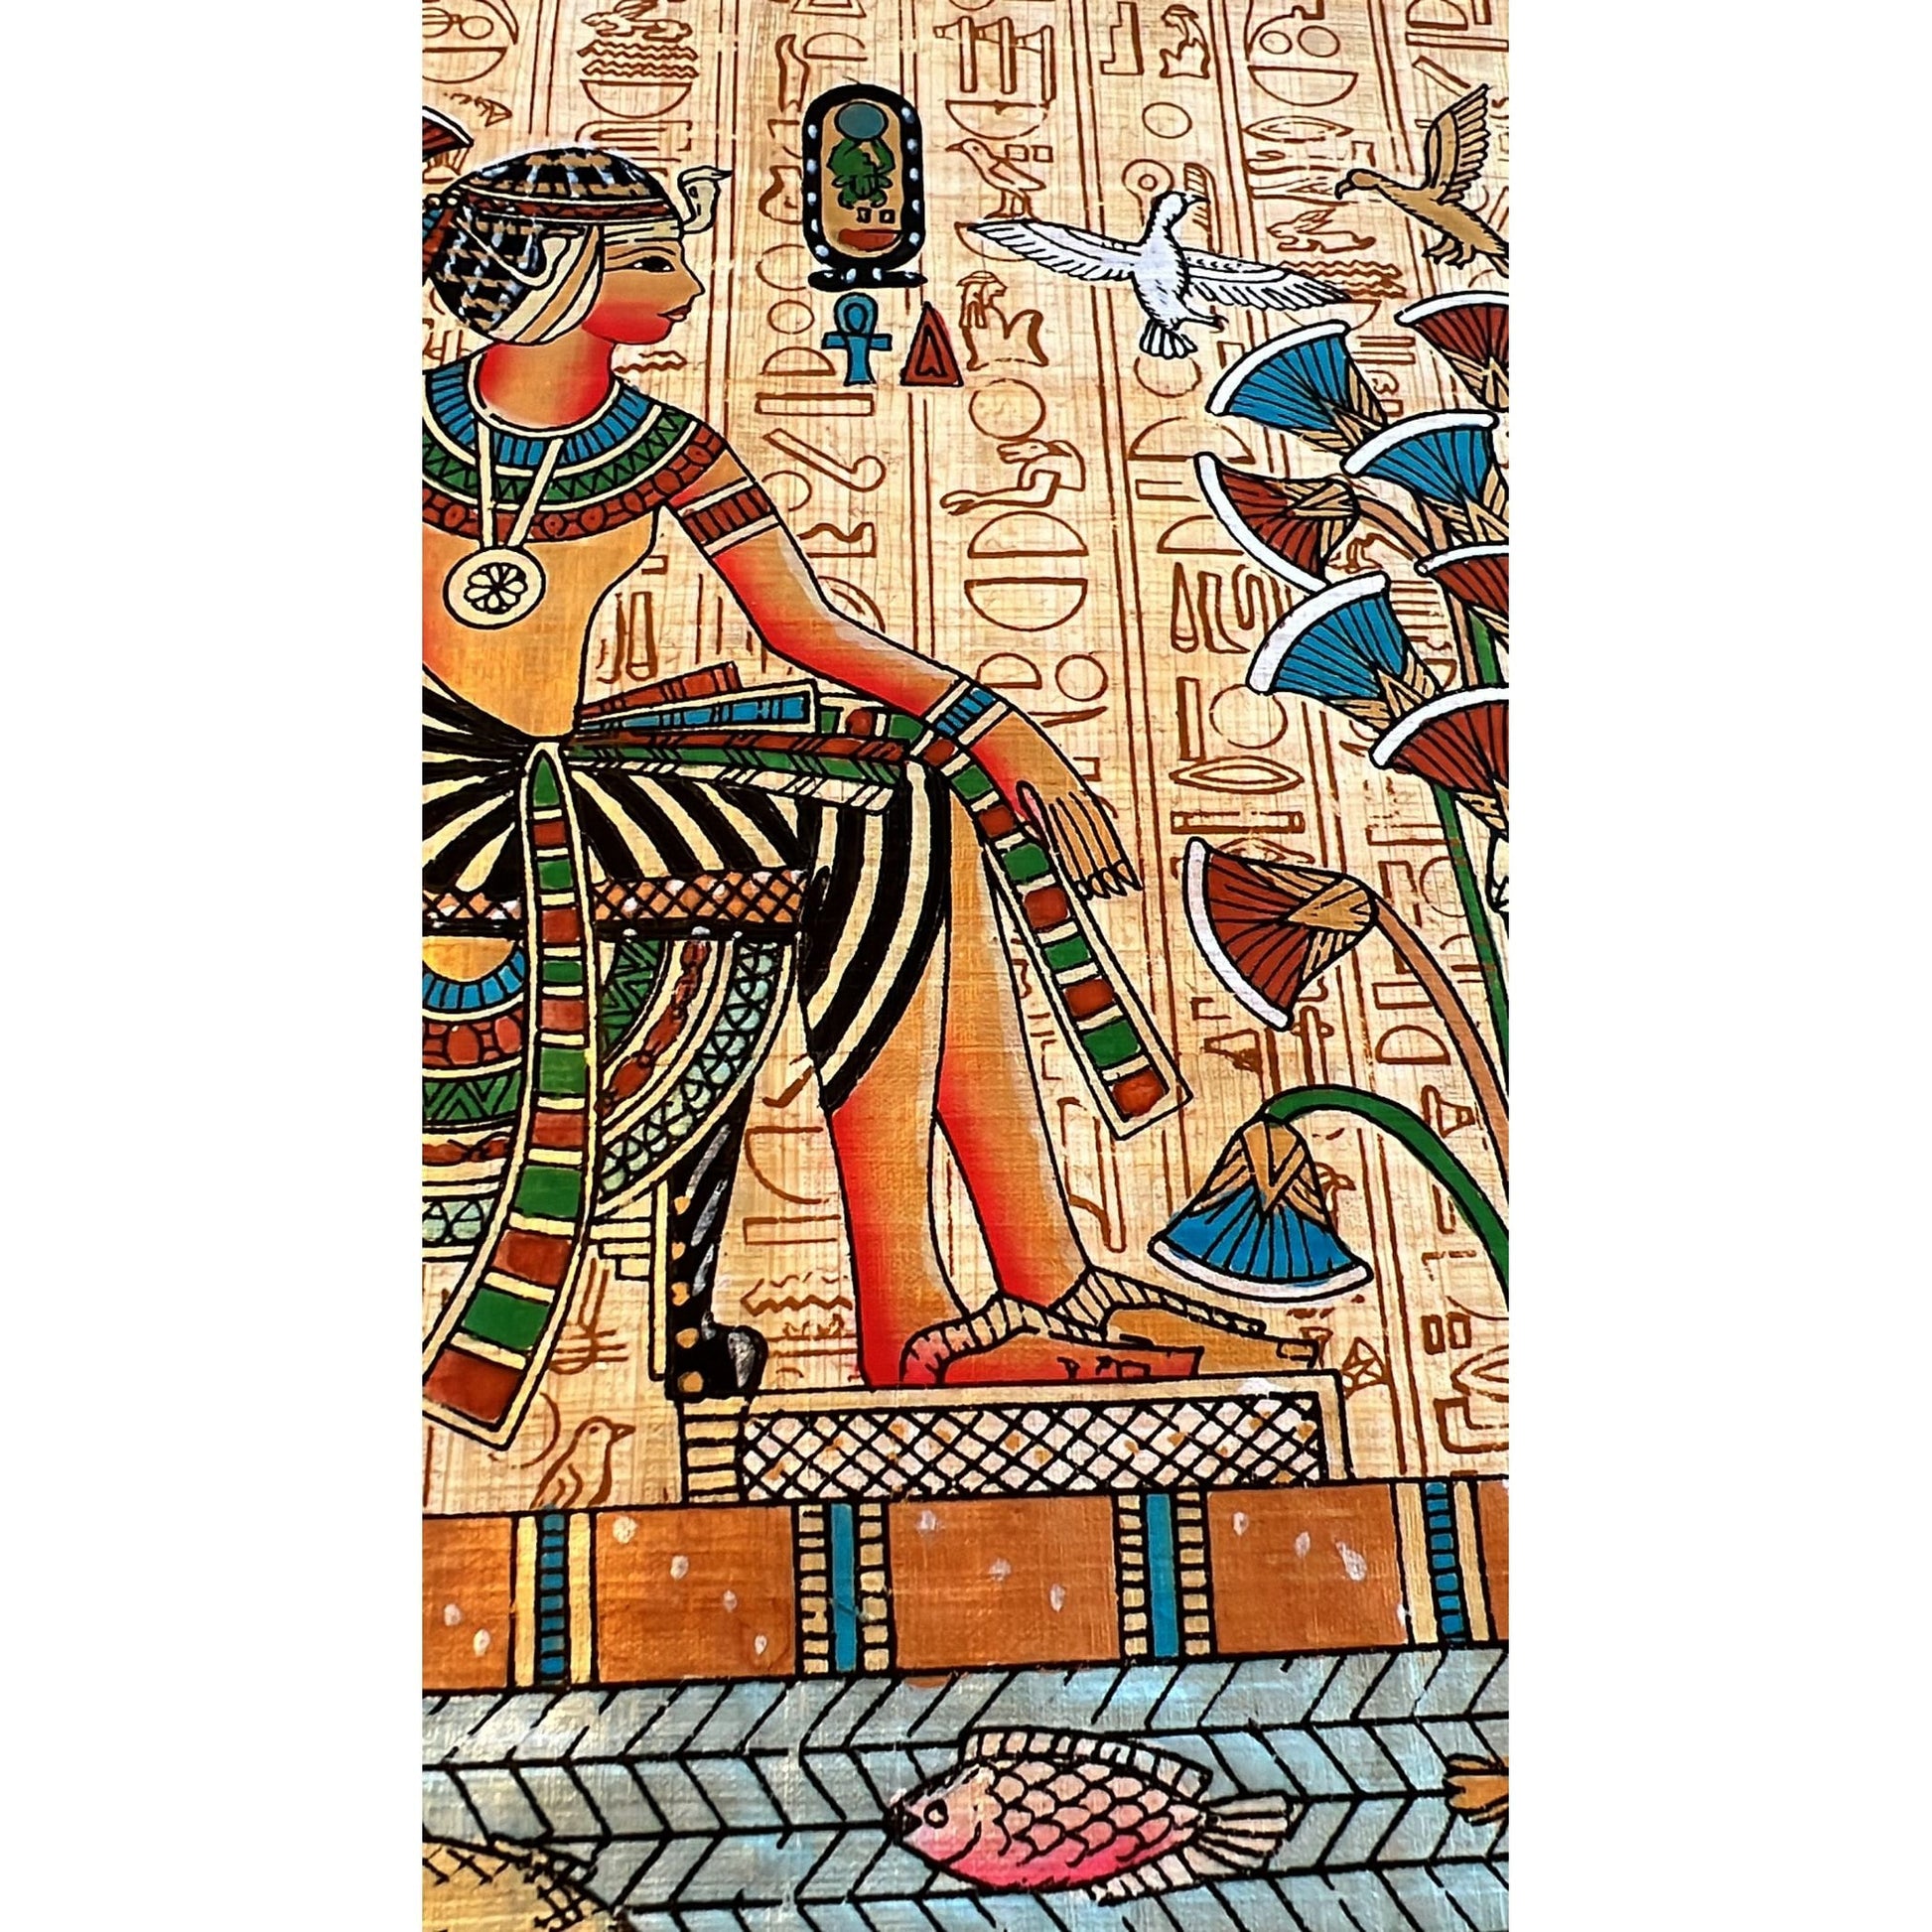 Egyptian Pharaoh King Tutankhamun King and Queen Ankhesenamun Cruising the Nile Papyrus Hieroglyph Artwork